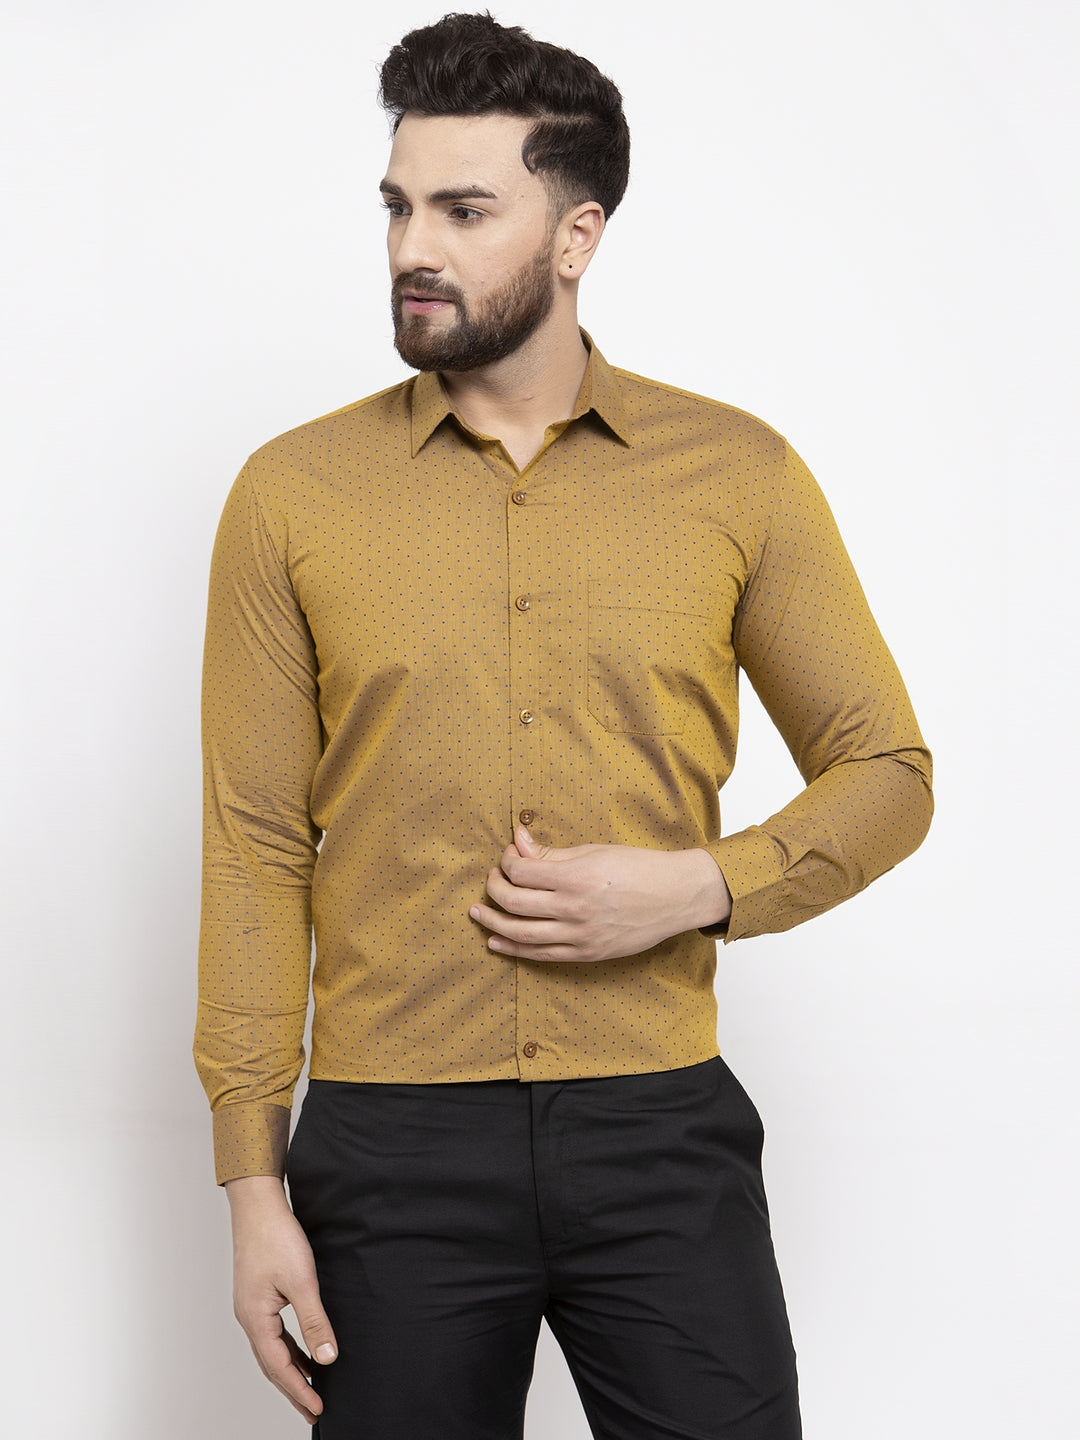 Men's Yellow Cotton Polka Dots Formal Shirts ( SF 739Mustard ) - Jainish